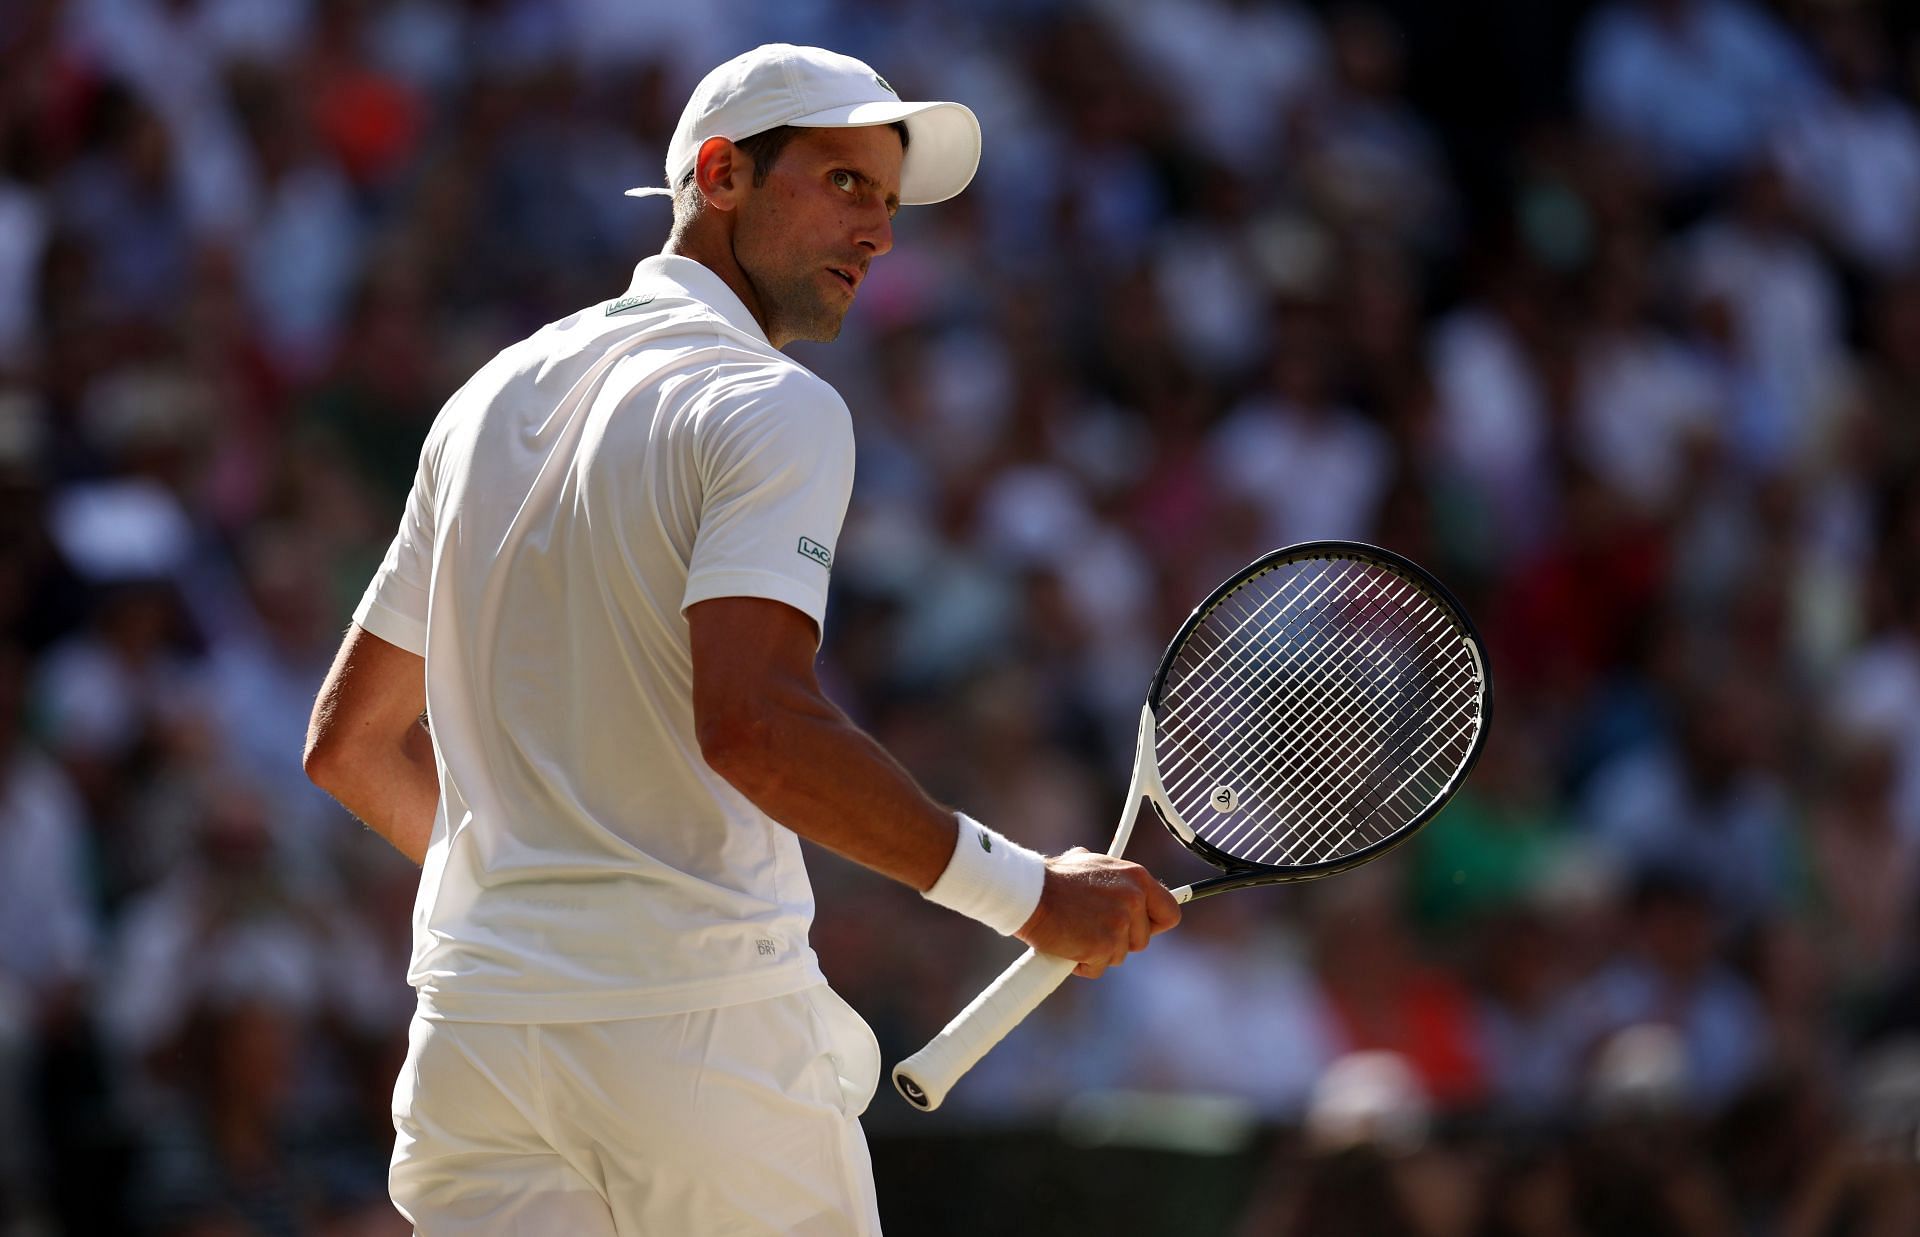 Novak Djokovic will contest his eighth &lt;a href=&#039;https://www.sportskeeda.com/go/wimbledon&#039; target=&#039;_blank&#039; rel=&#039;noopener noreferrer&#039;&gt;Wimbledon&lt;/a&gt; final on Sunday.